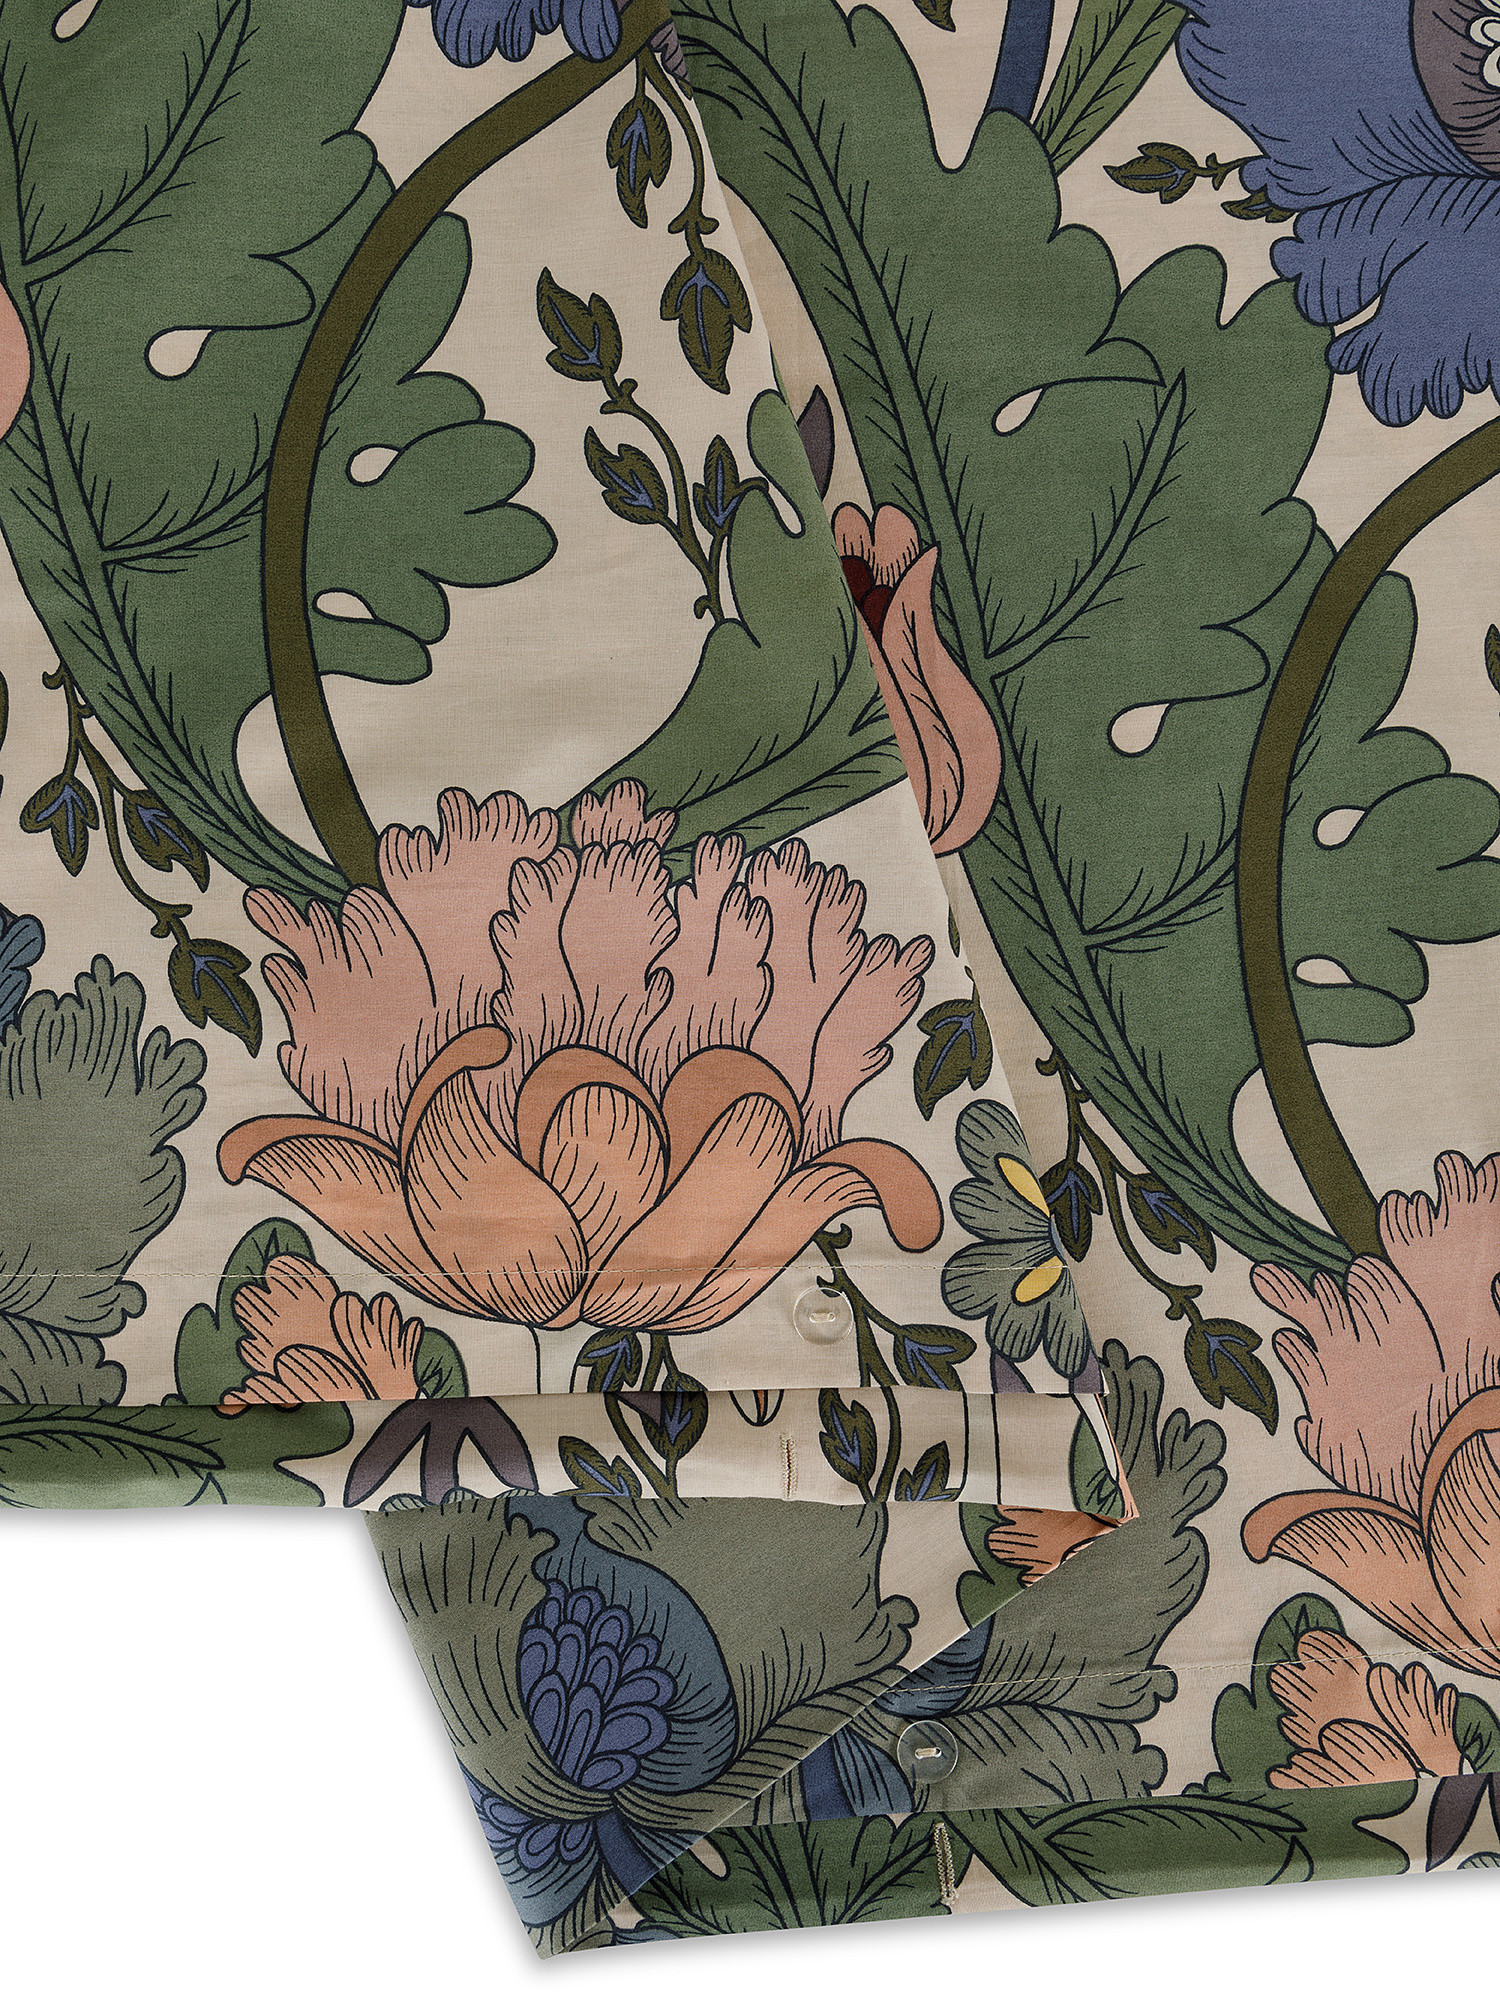 Parure copripiumino cotone percalle fantasia floreale, Multicolor, large image number 1